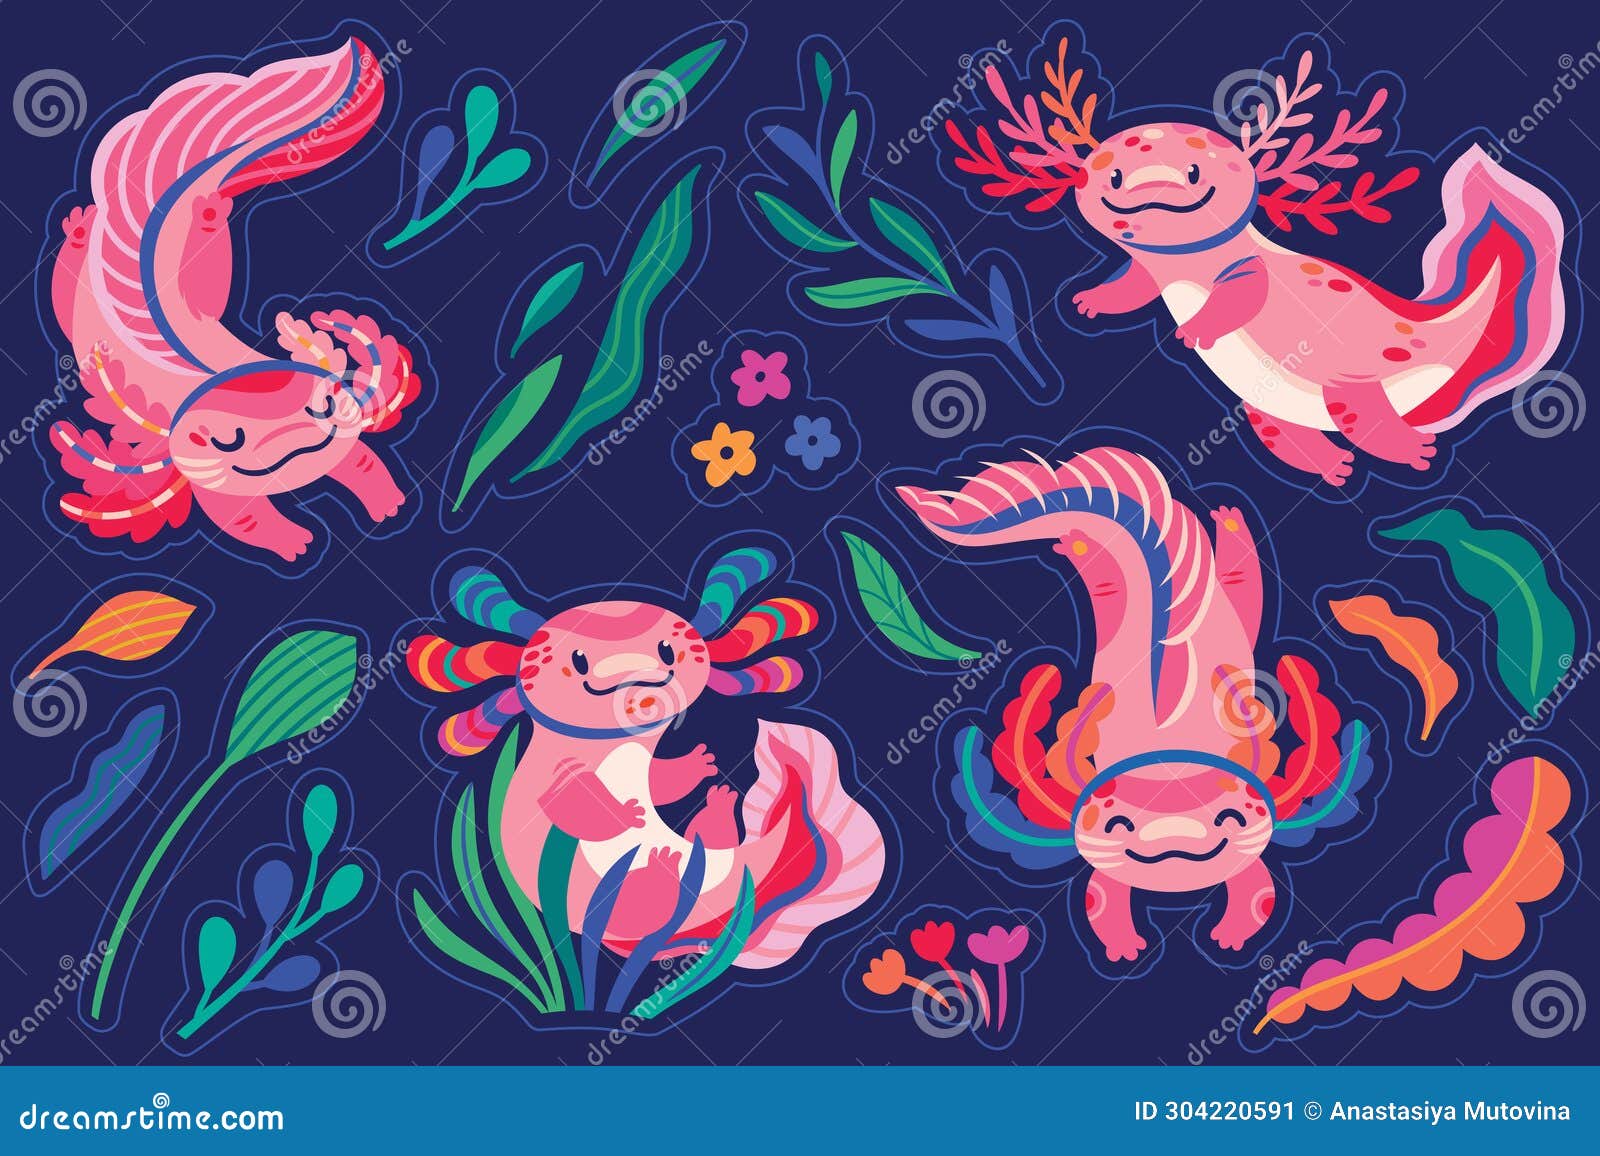 Sticker Set of Four Cute Cartoon Axolotls, Amphibian Creatures are ...